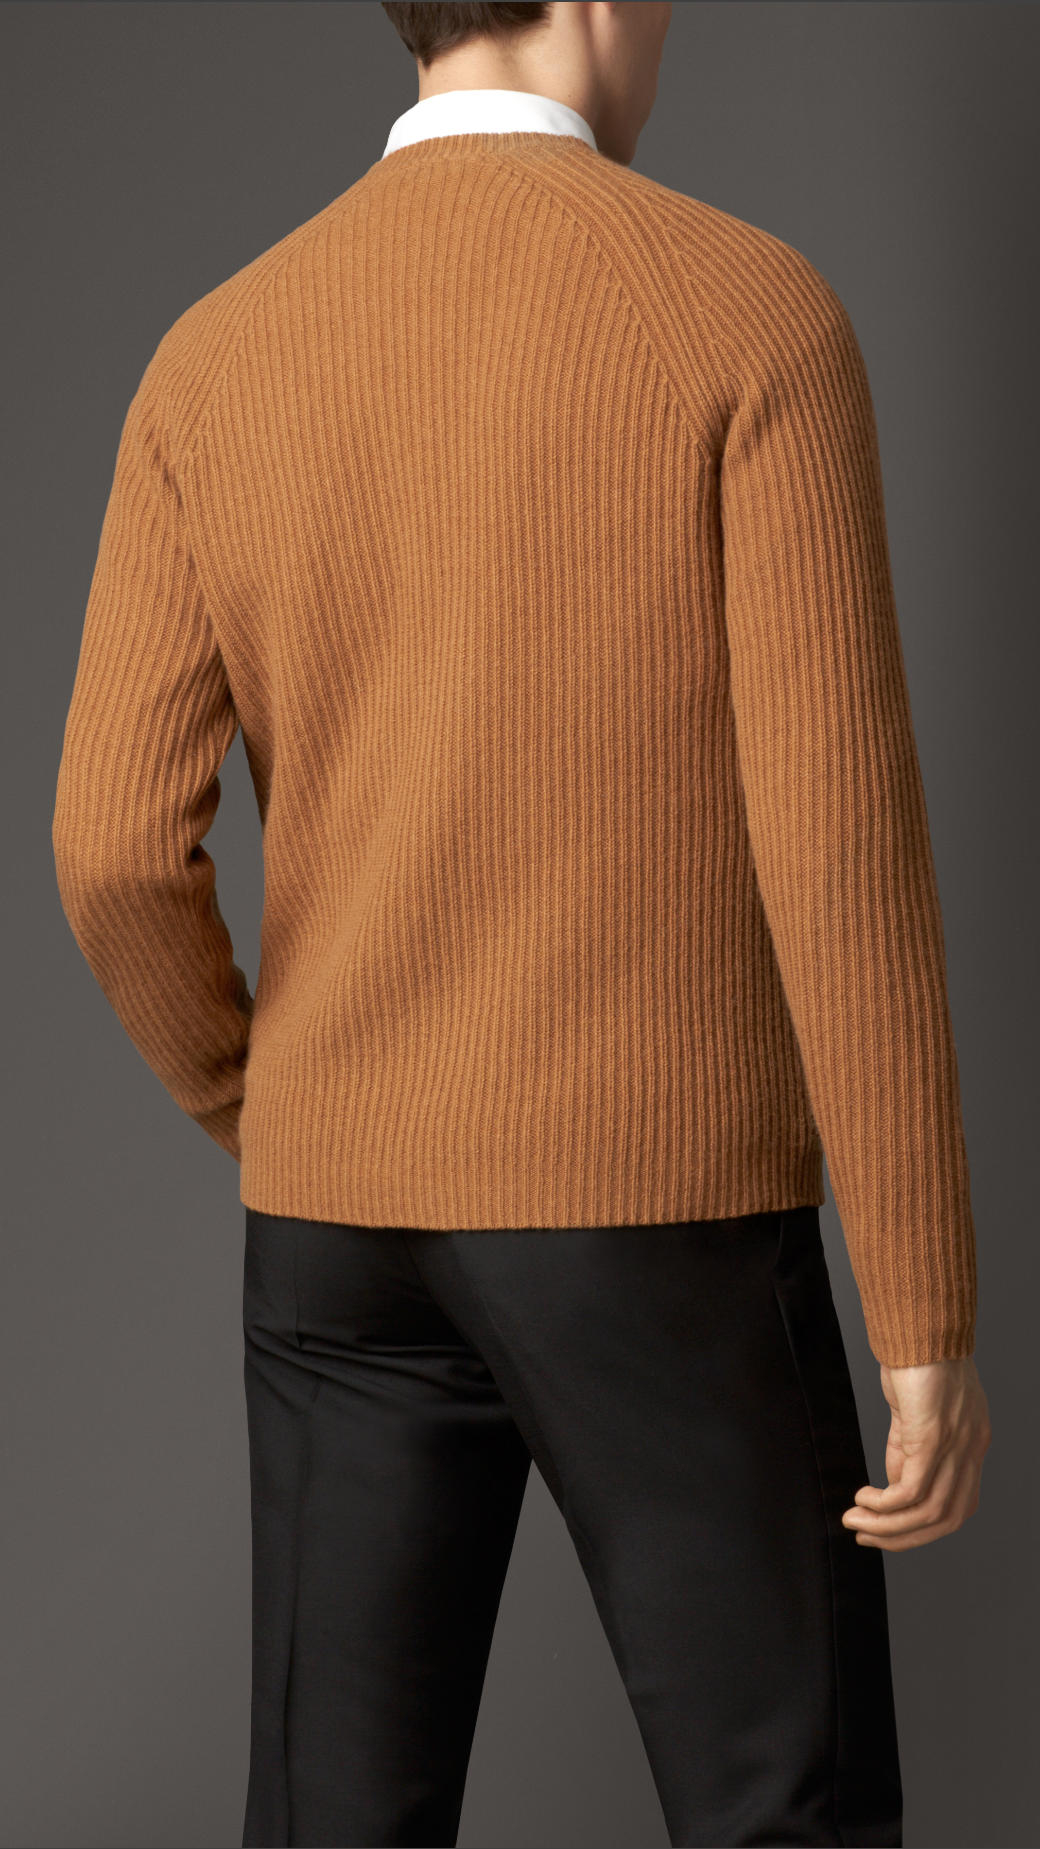 Lyst - Burberry Lightweight Cashmere Sweater in Orange for Men